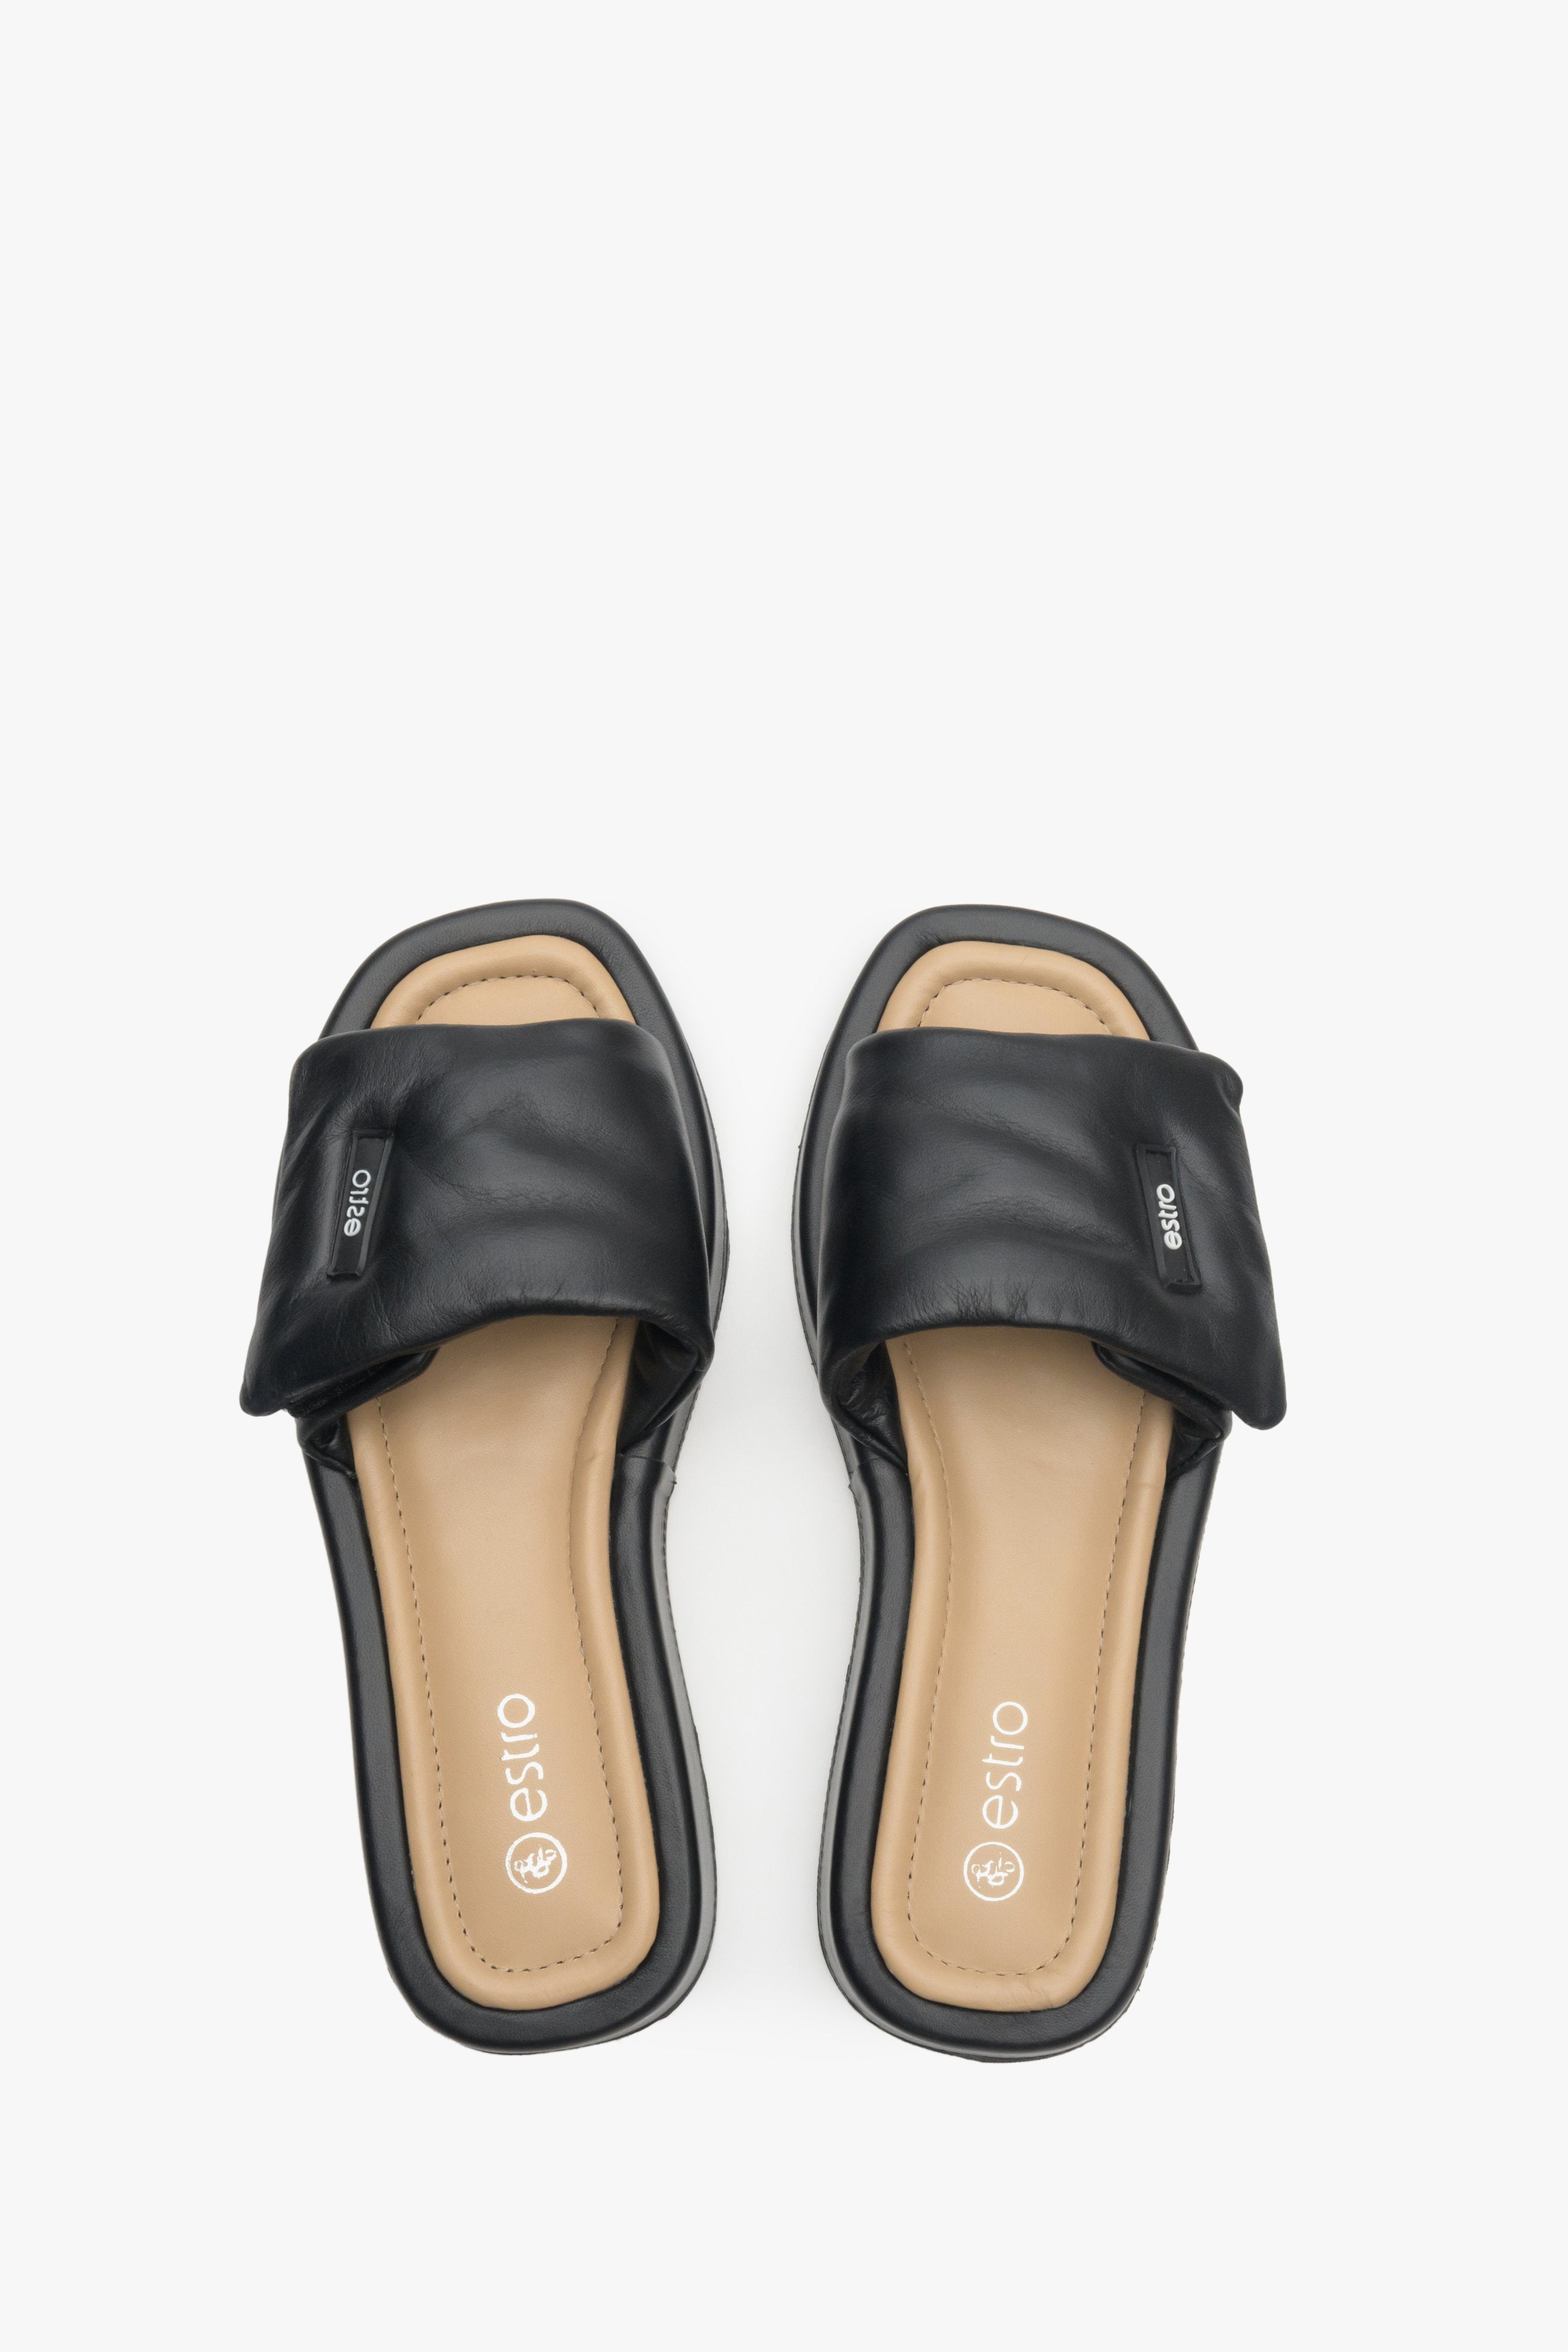 Women's slide sandals in black - presentation from above.